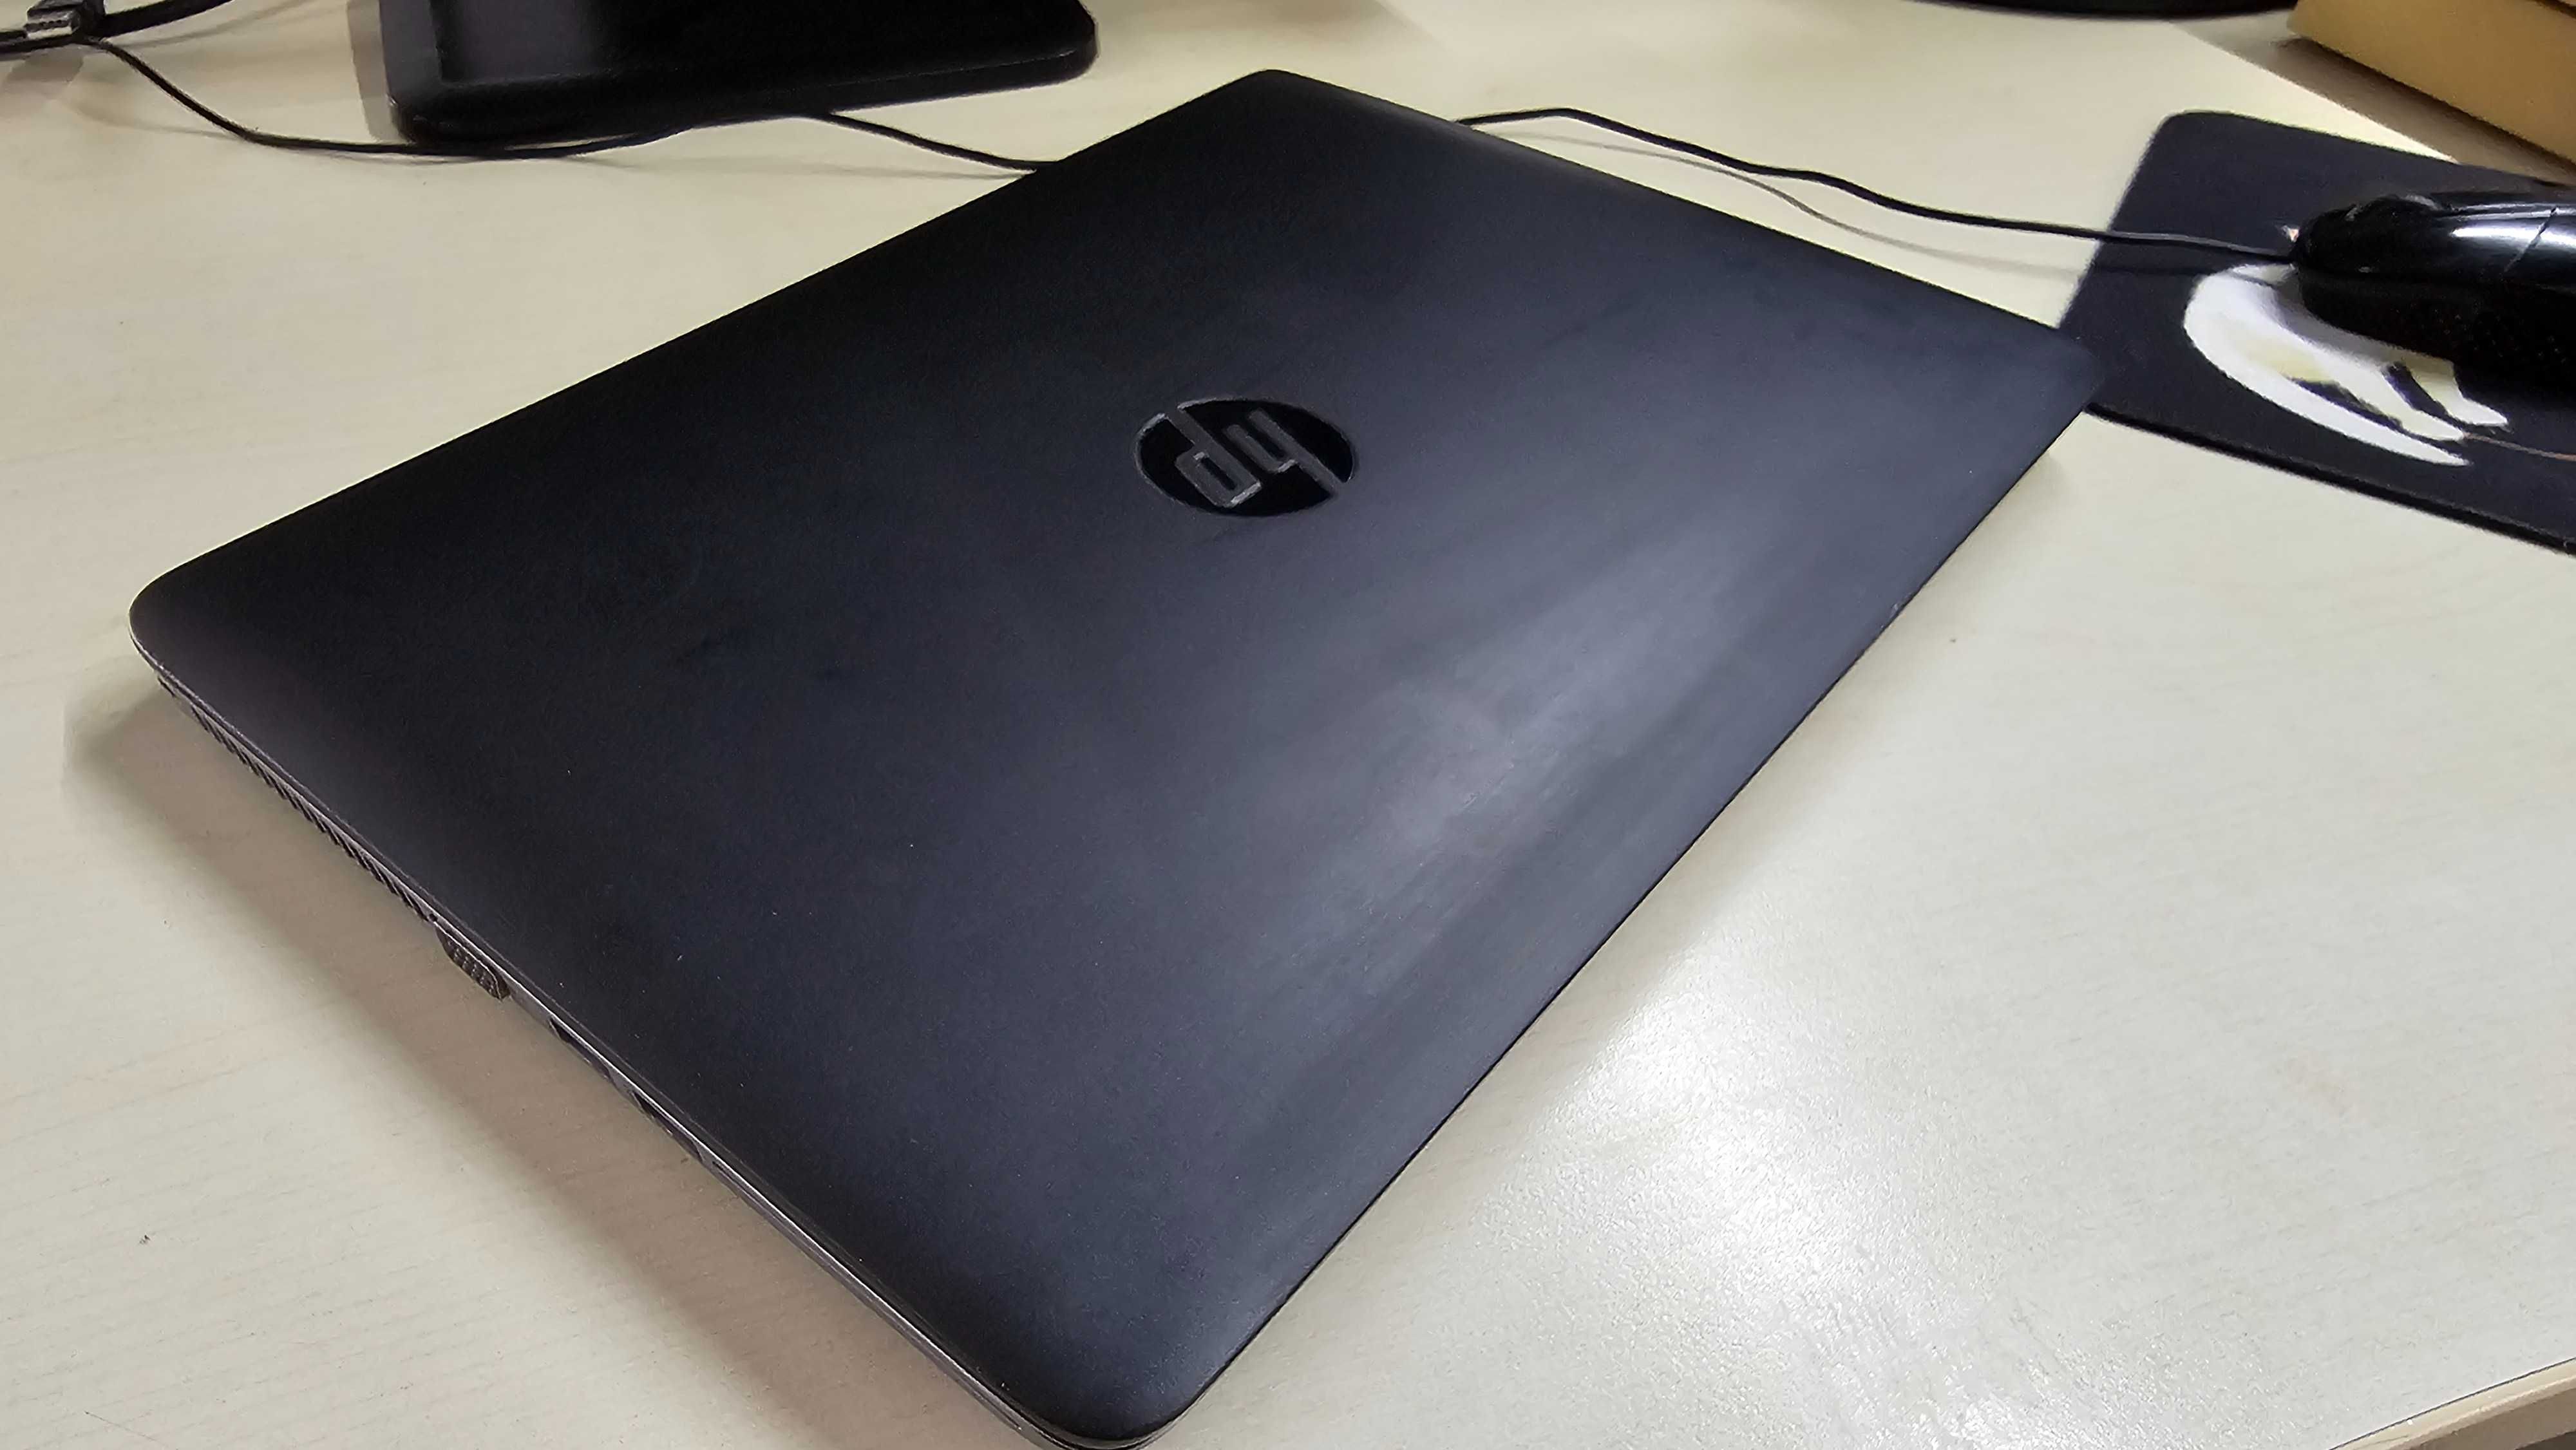 Laptop HP Elitebook 840 G1, 16GB RAM, Procesor i5, 240gb SSD